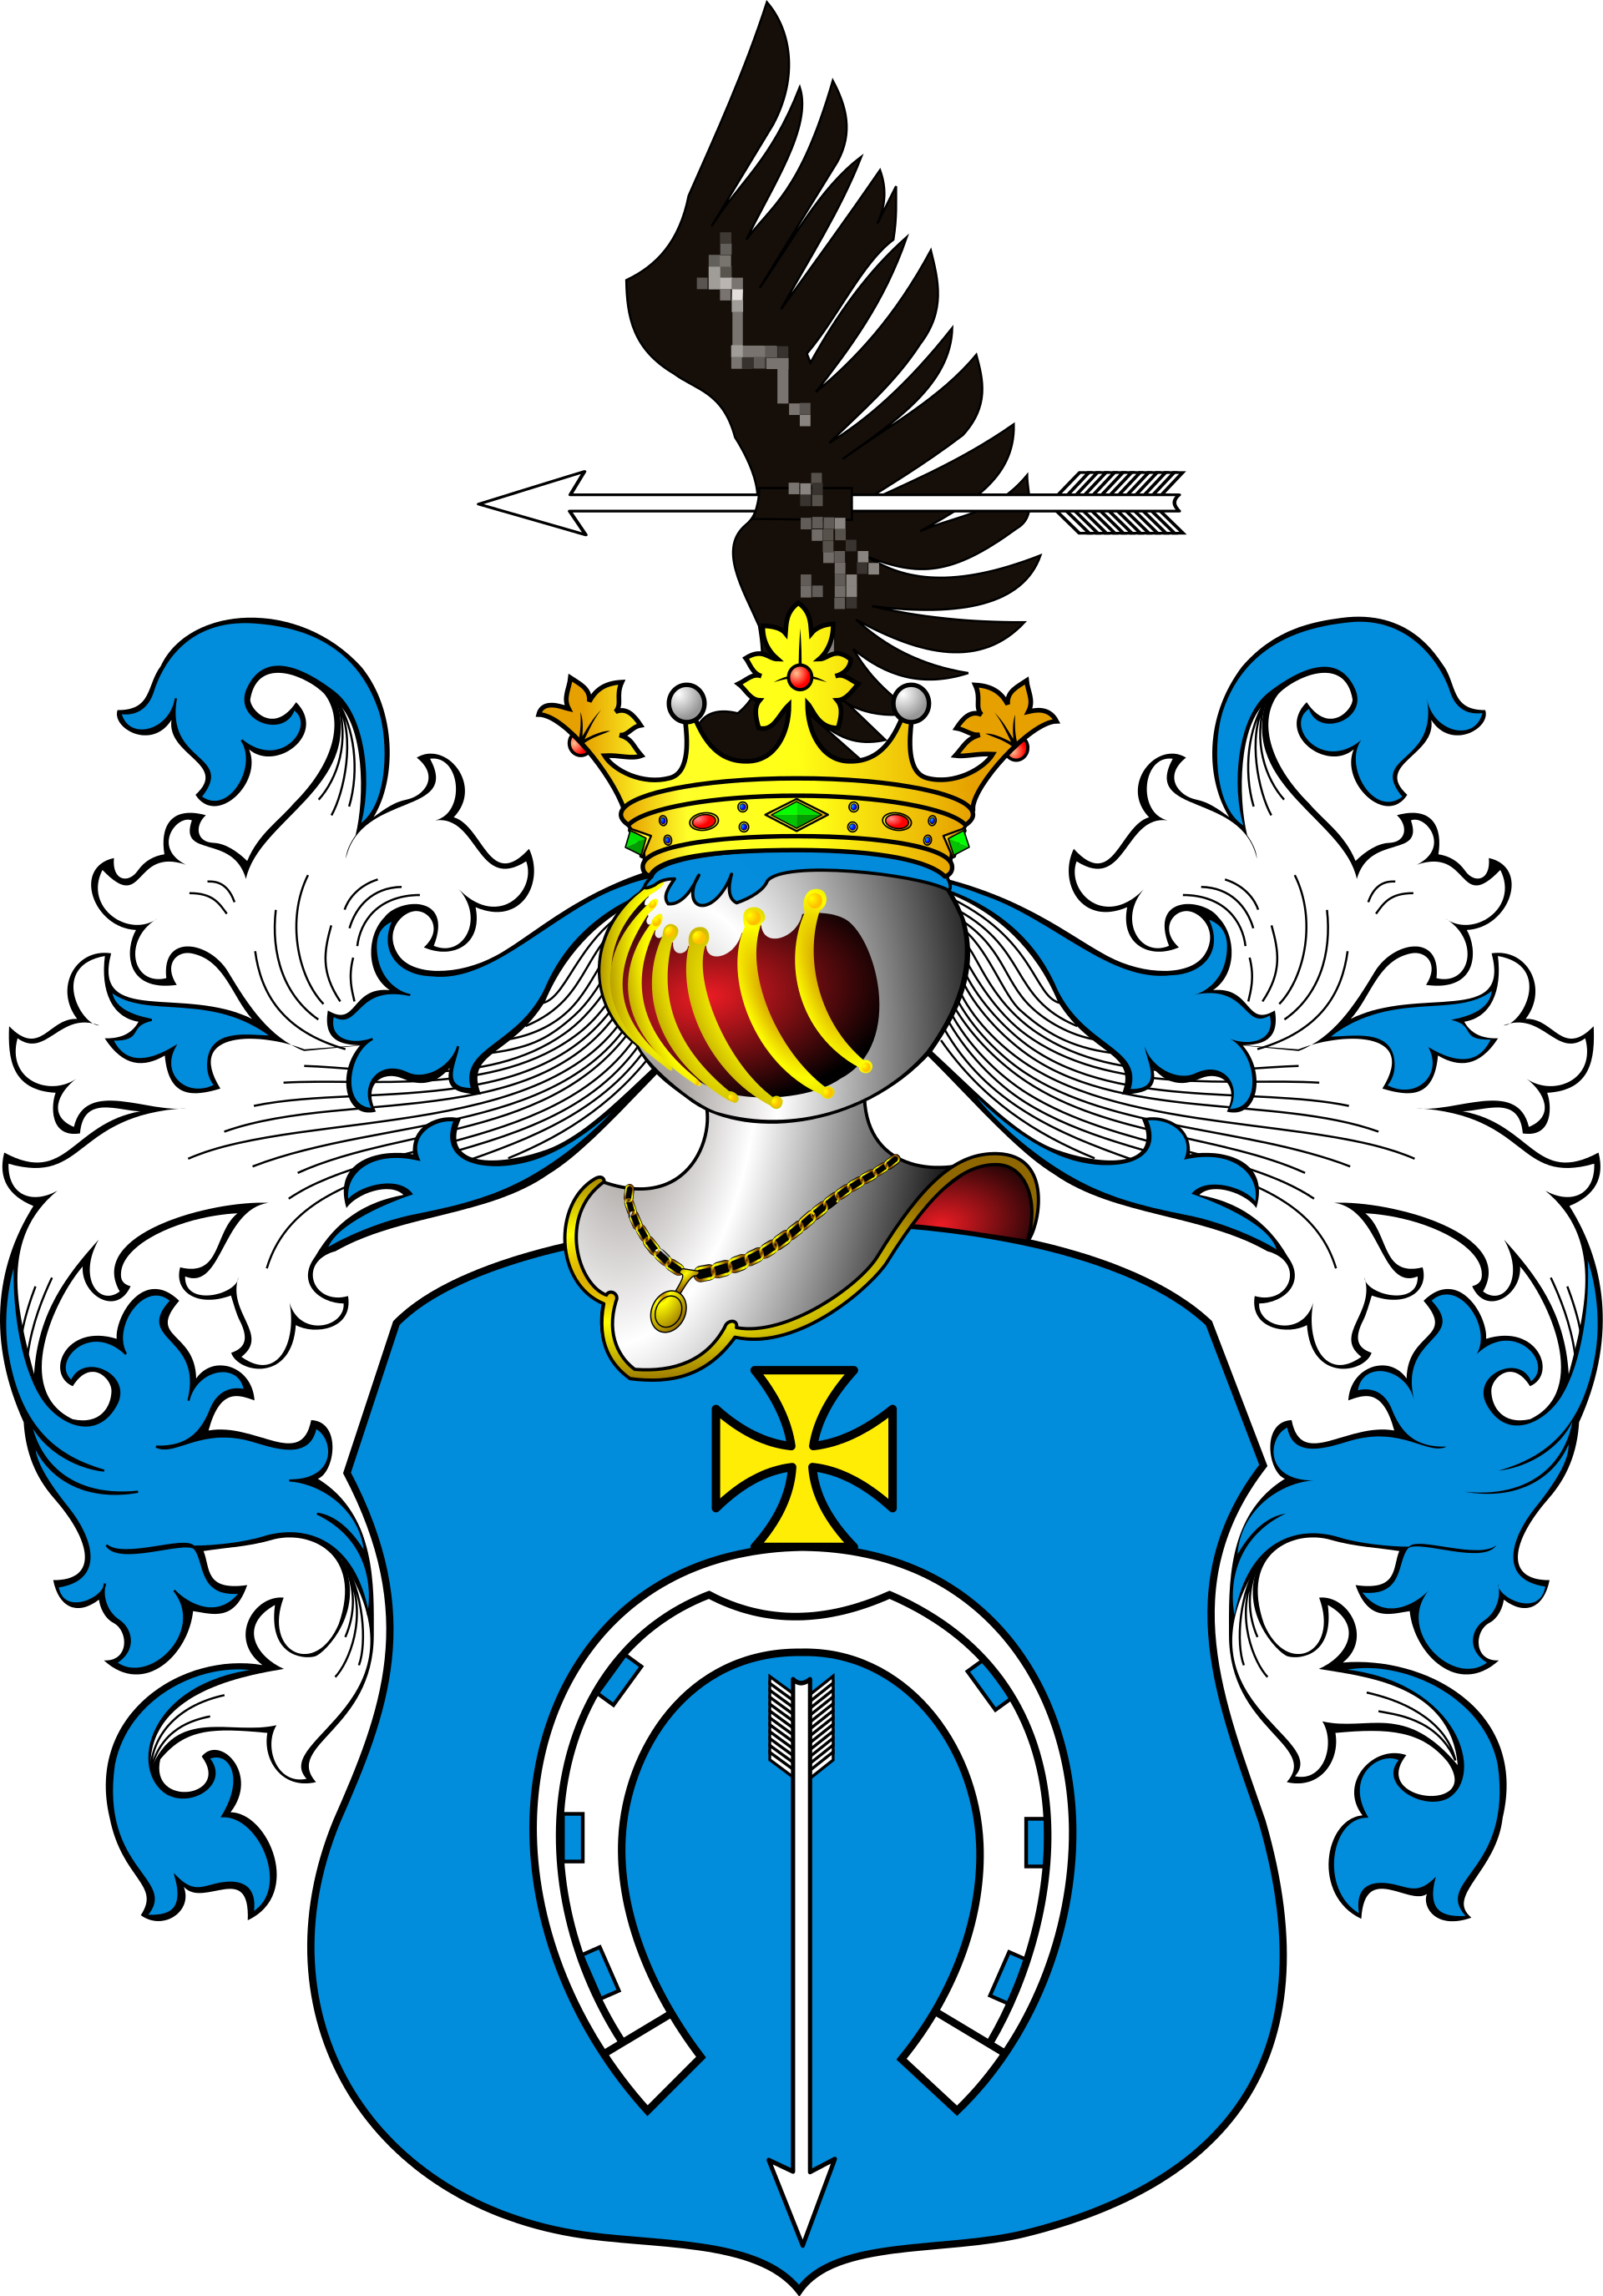 DoÅ?Ä?ga coat of arms - Wikipedia - ClipArt Best - ClipArt Best